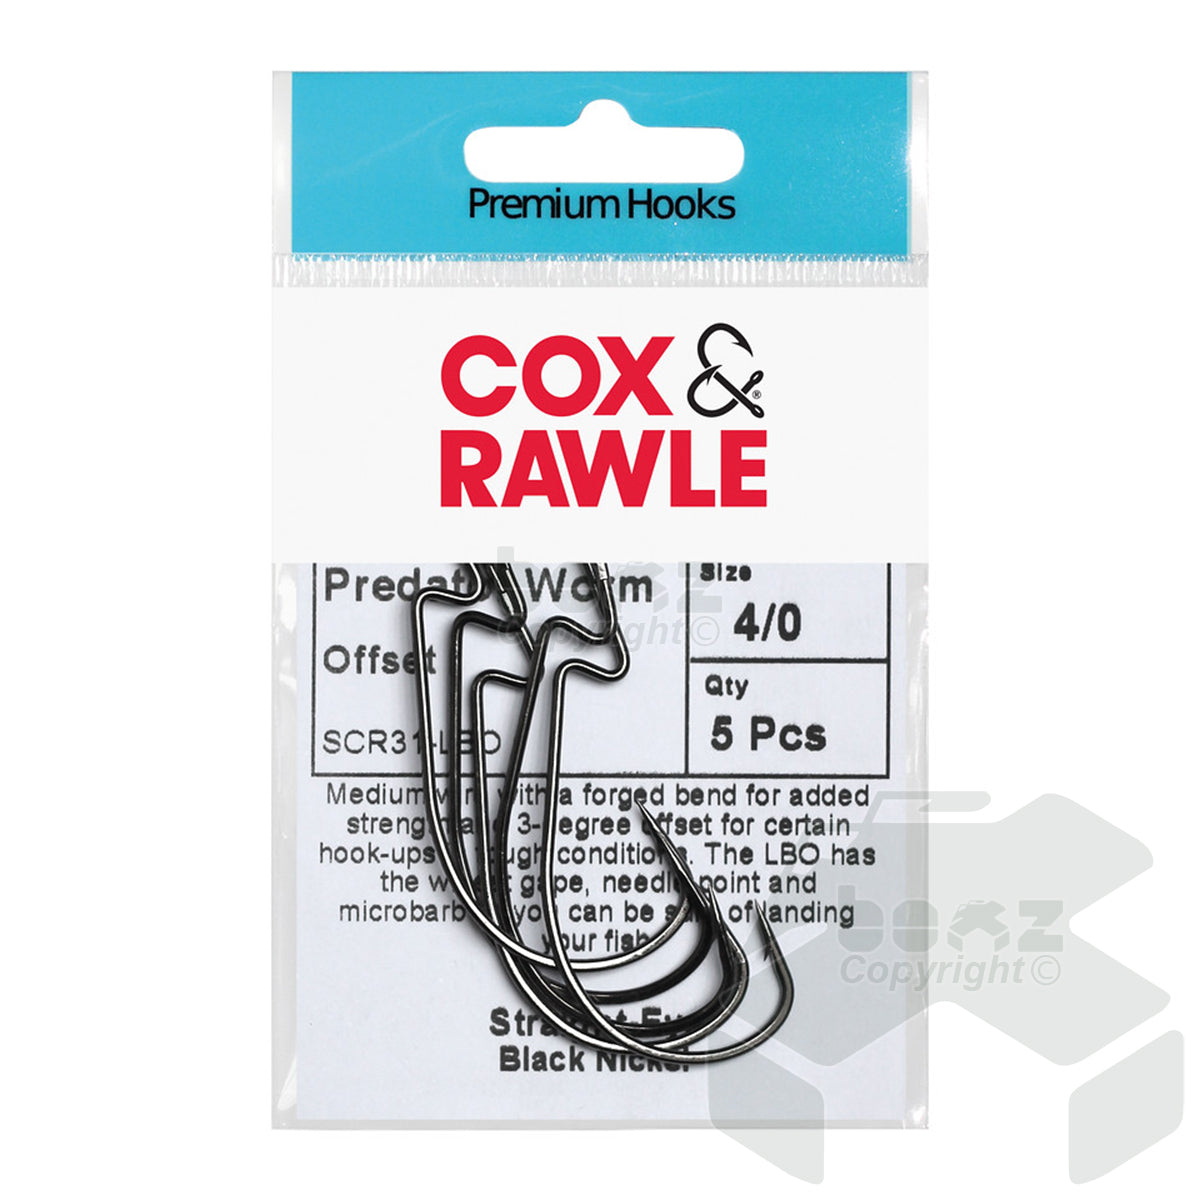 Cox & Rawle Predator Worm Offset Hooks